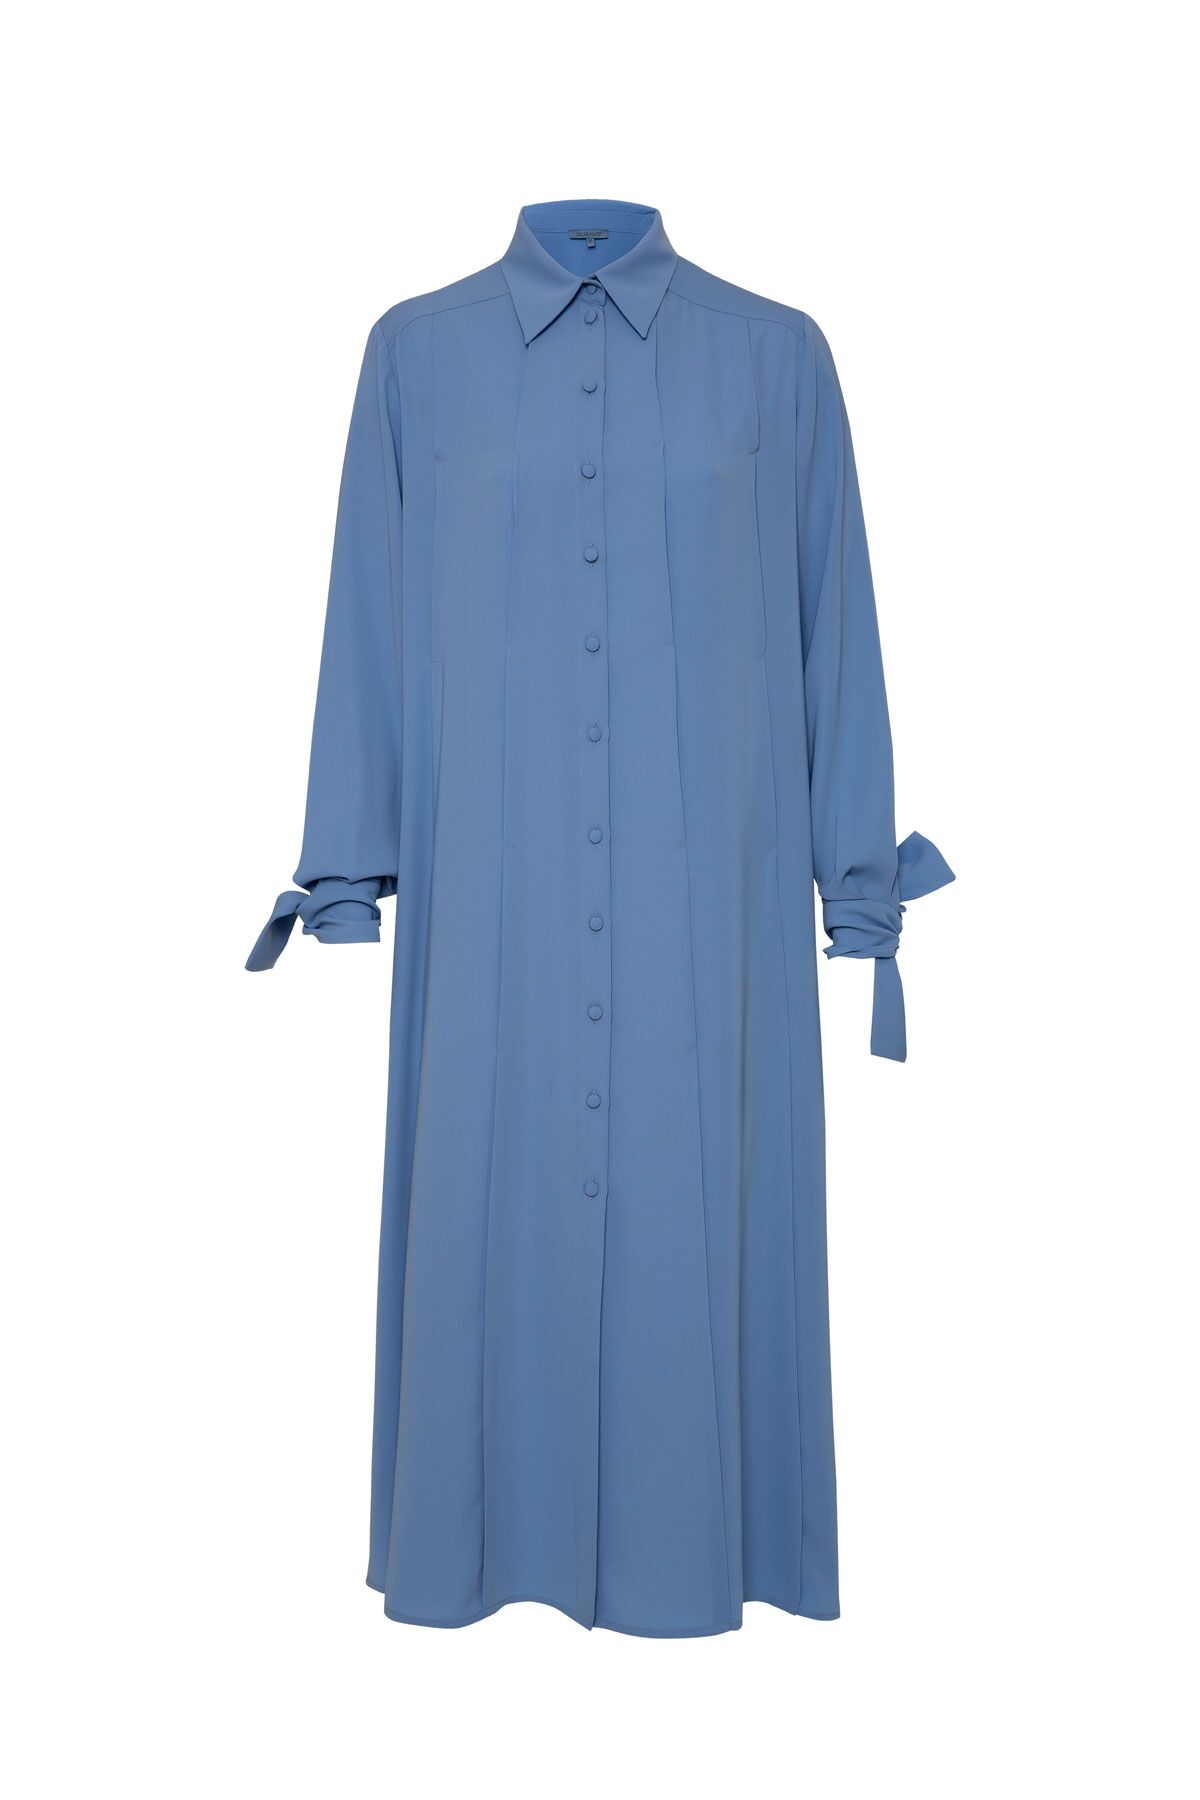 GIZIAGATE - Tie Cuff Detail Long Shirt Blue Dress